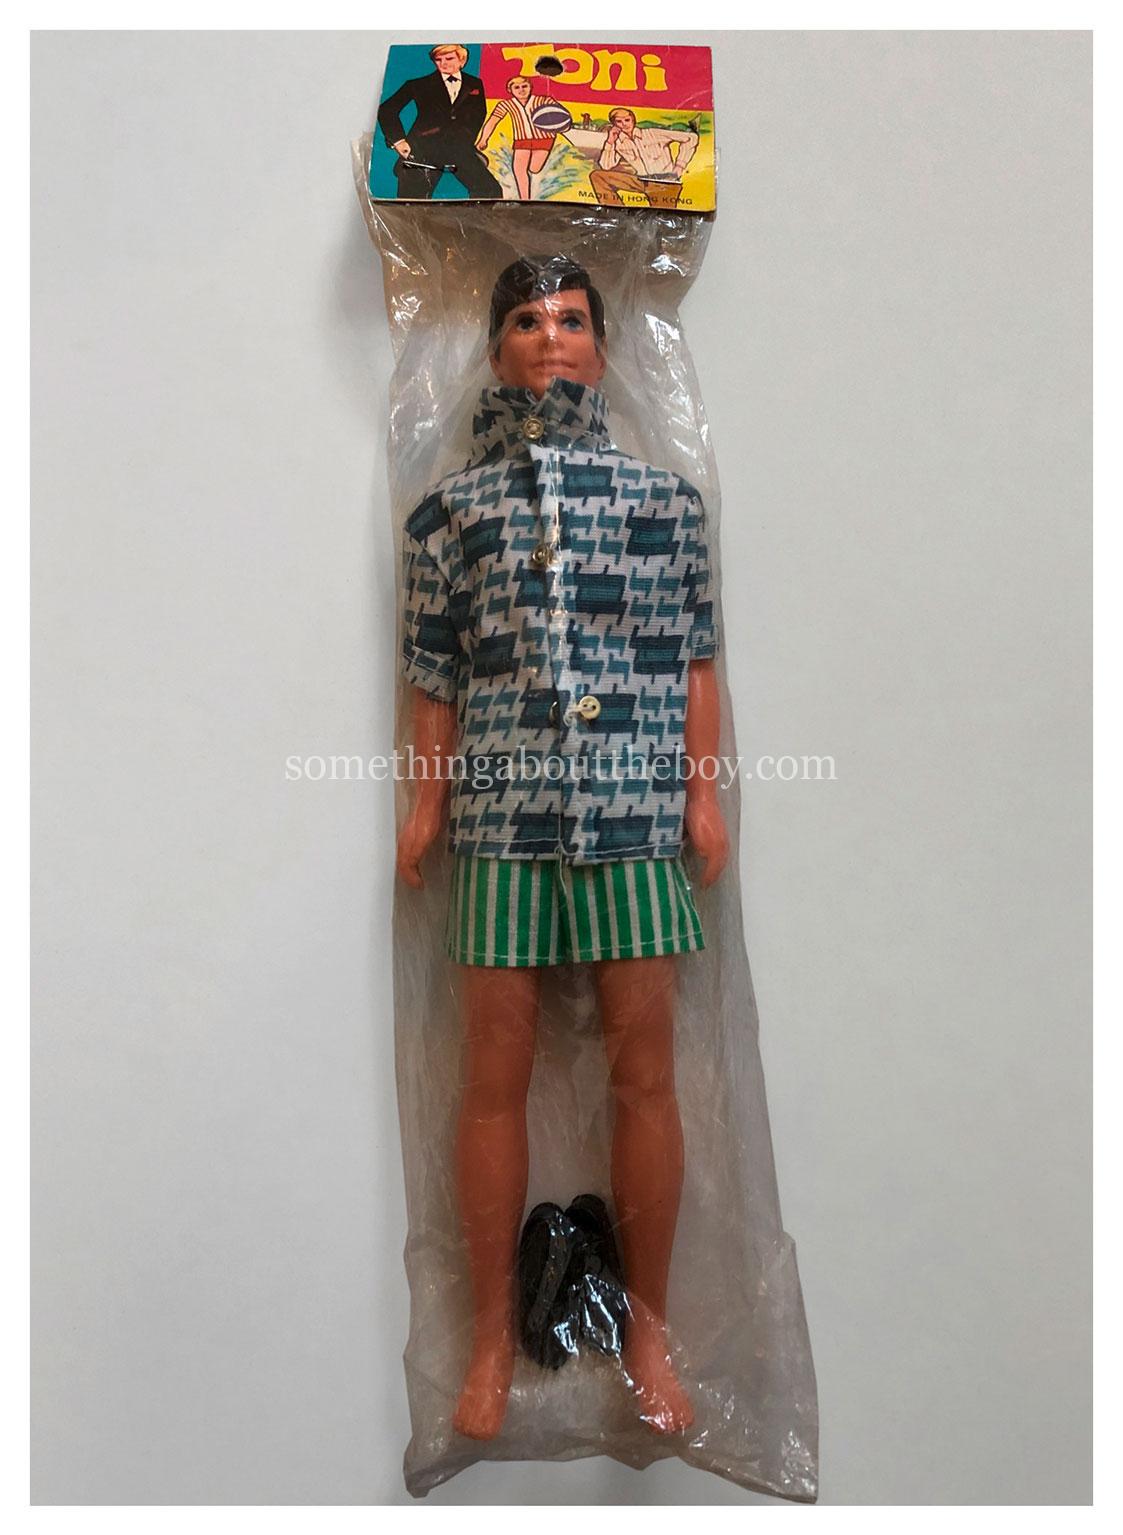 1970s Toni doll in original packaging